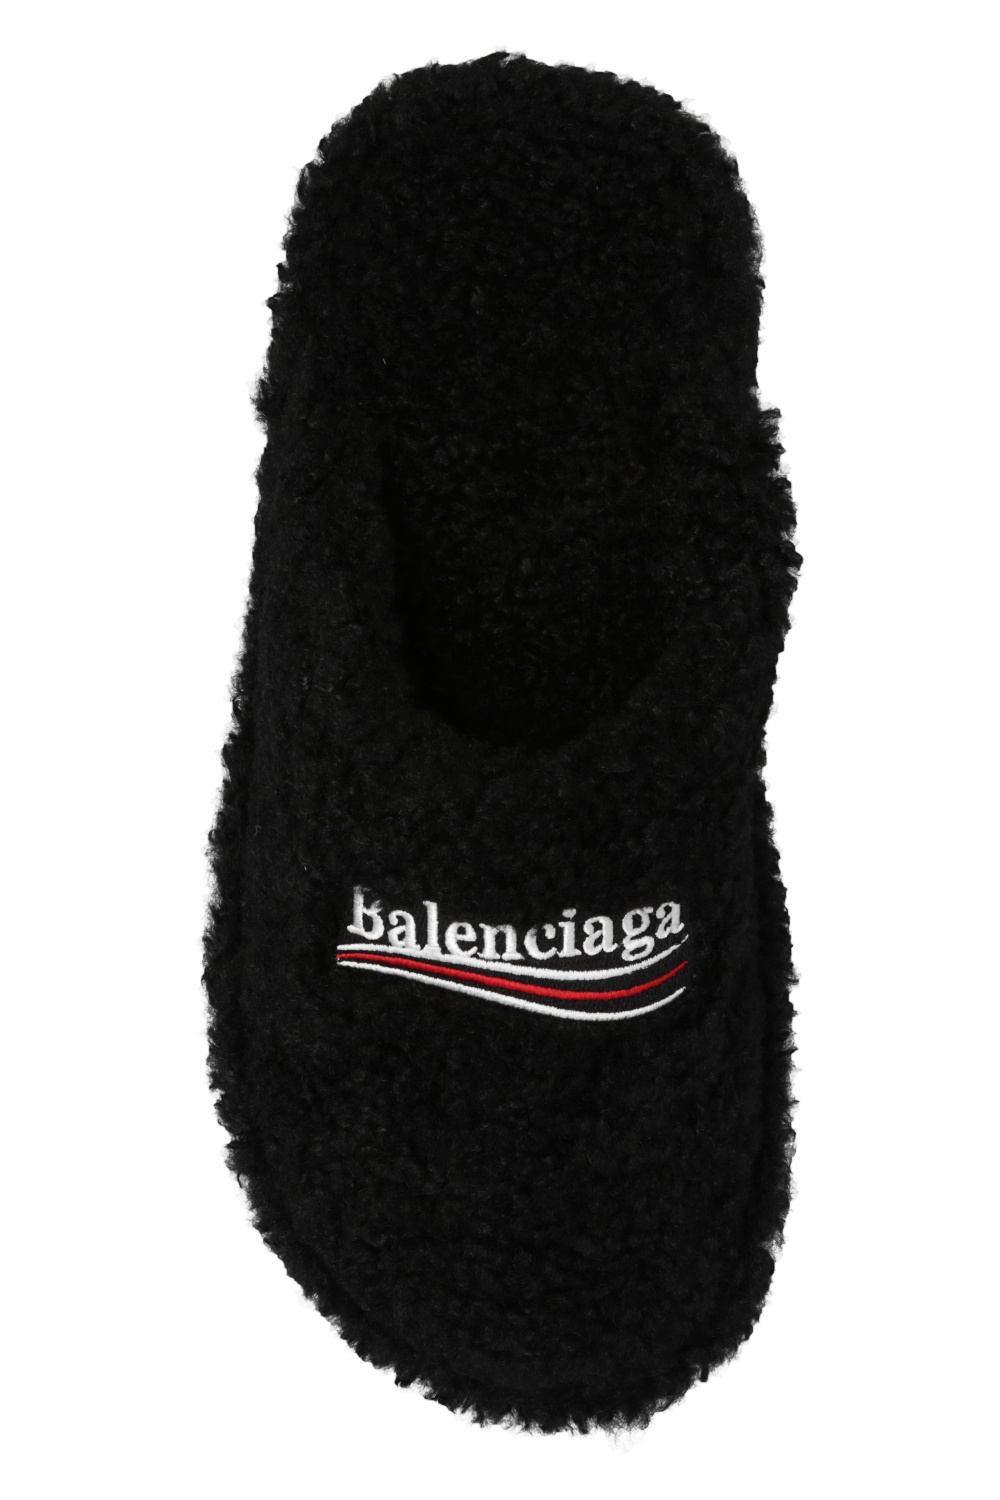 Balenciaga Sandals BERKEMANN Coletta 01751 Shiny Dark Metal 422